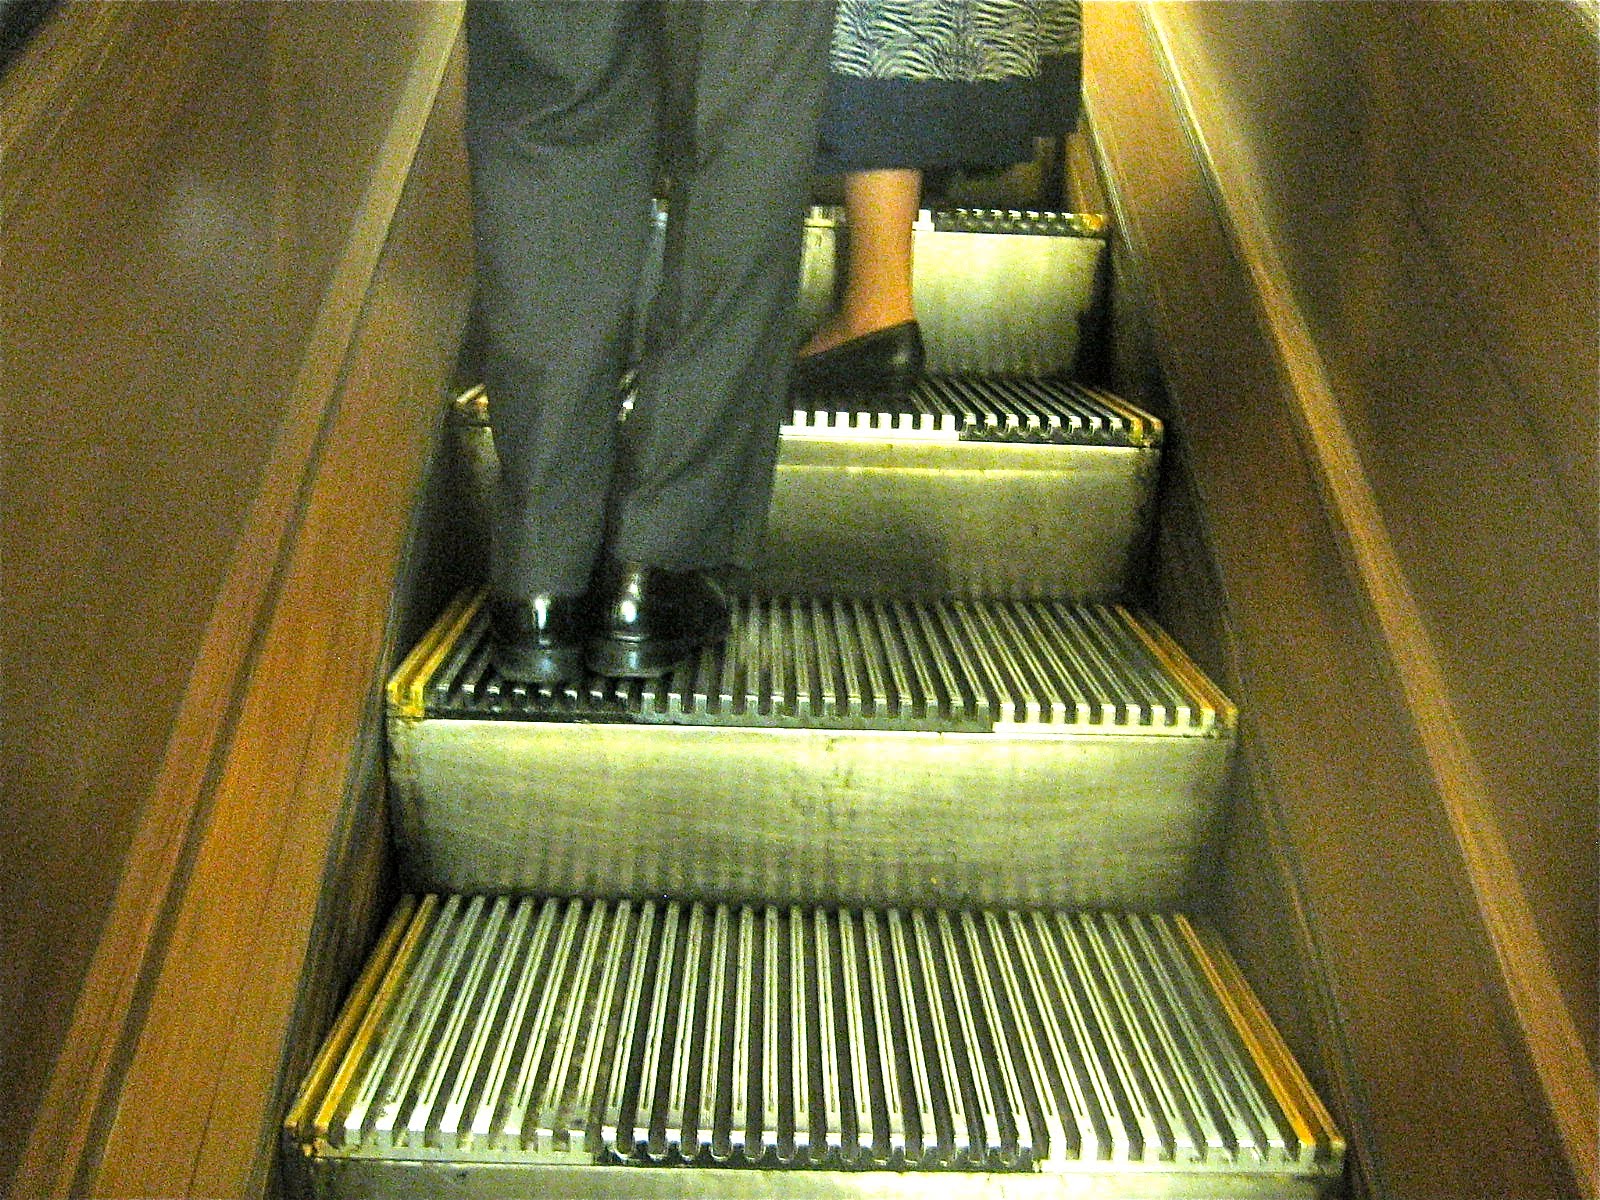 Escalator Step Chain: Watch Those Escalator Steps